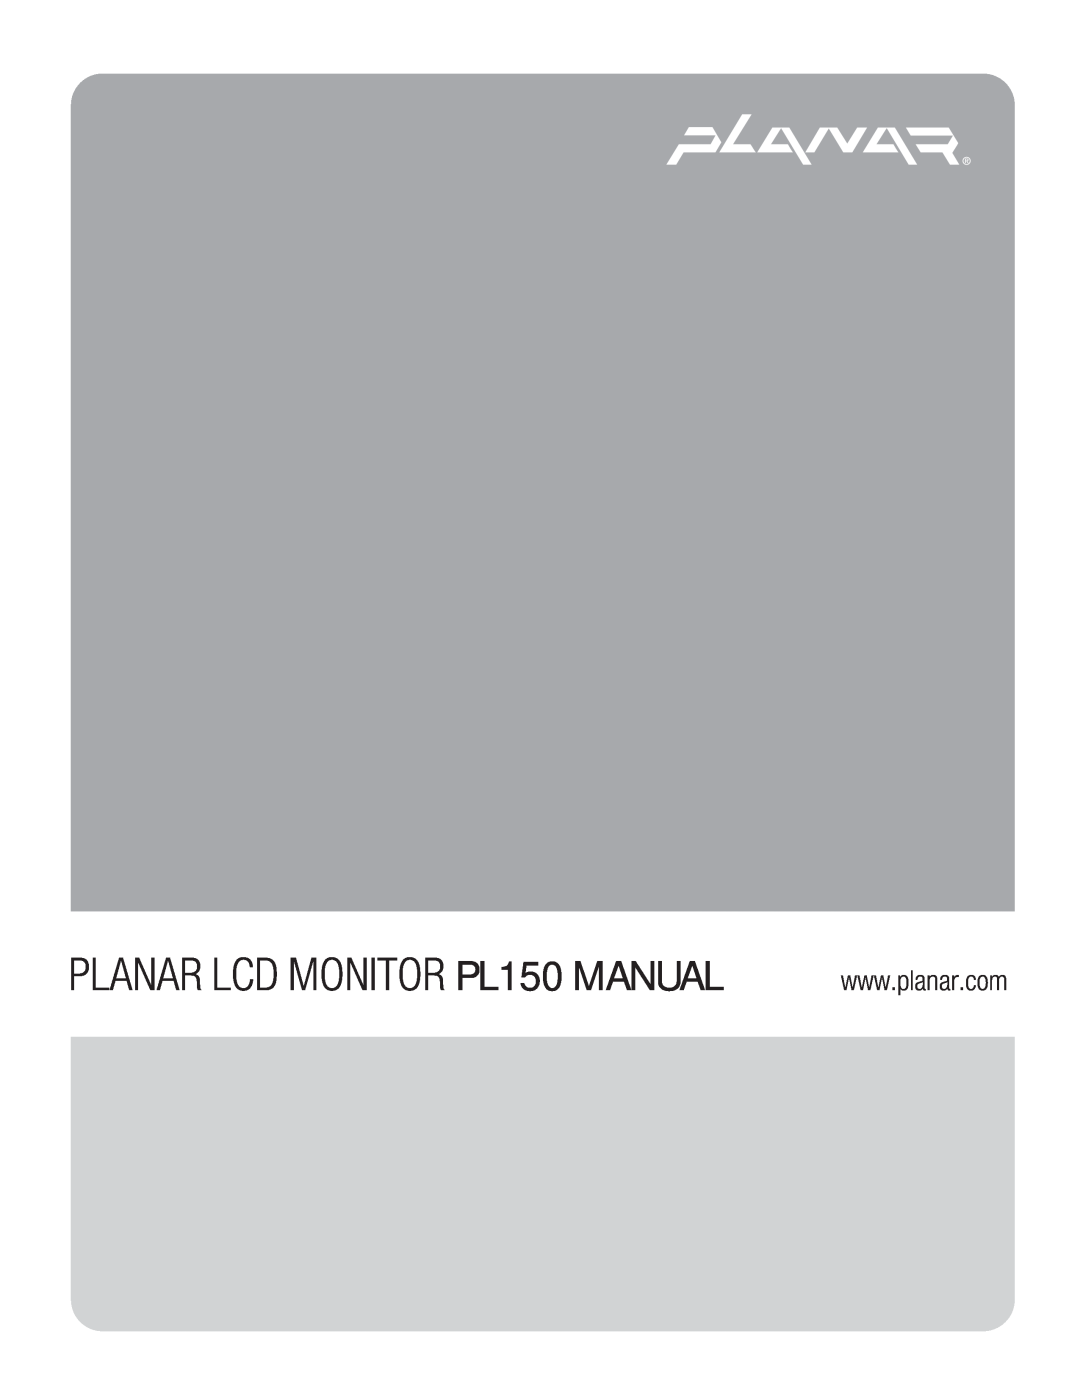 Planar manual PLANAR LCD MONITOR PL150 MANUAL 